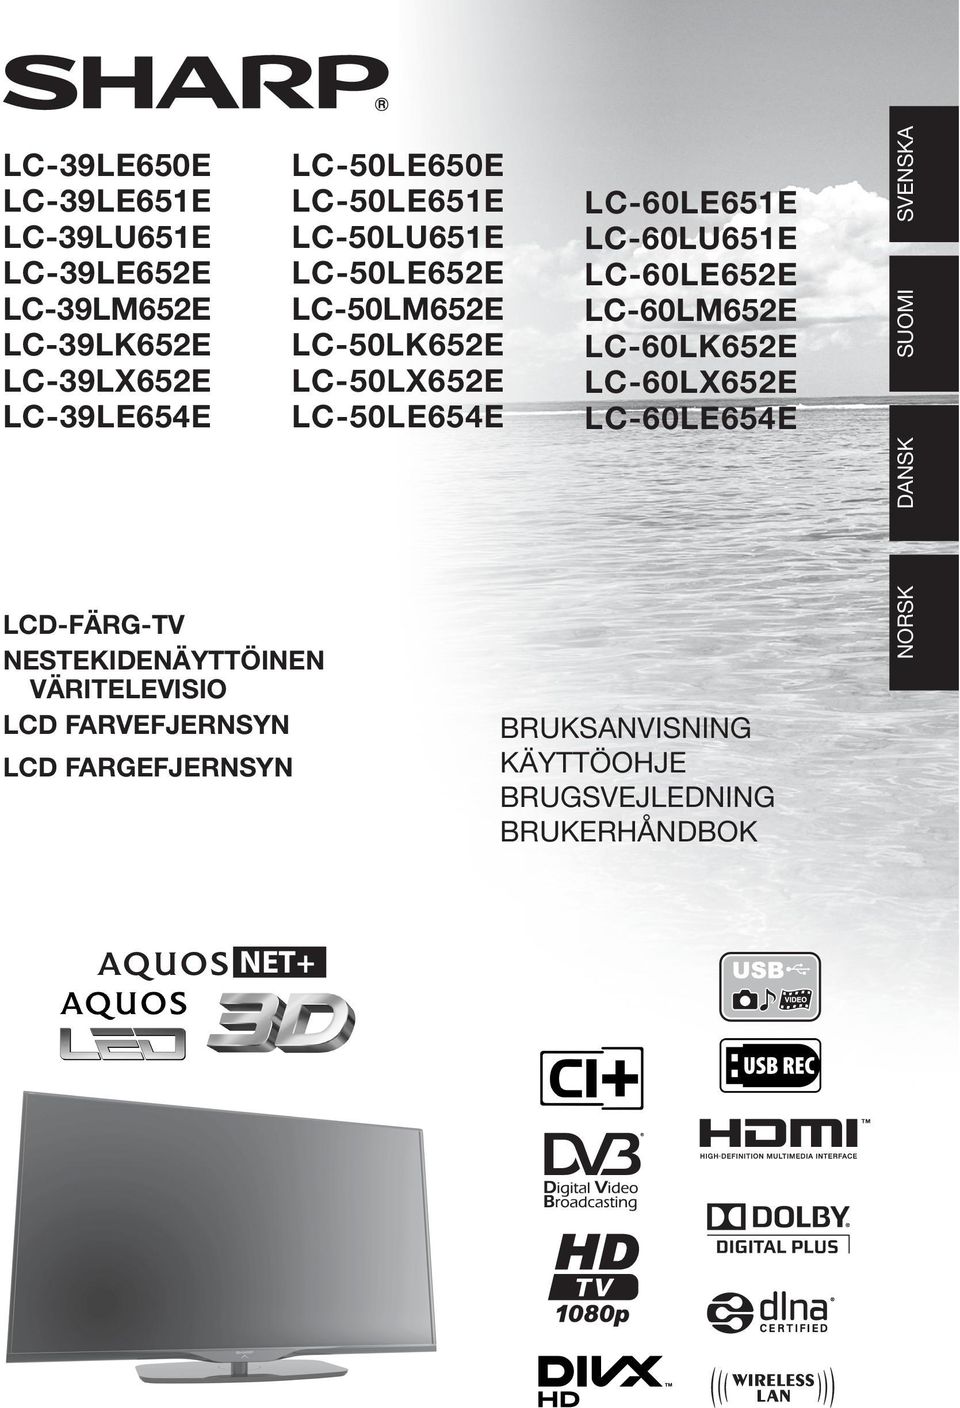 LC-60LE652E LC-60LM652E LC-60LK652E LC-60LX652E LC-60LE654E SVENSKA SUOMI DANSK LCD-FÄRG-TV